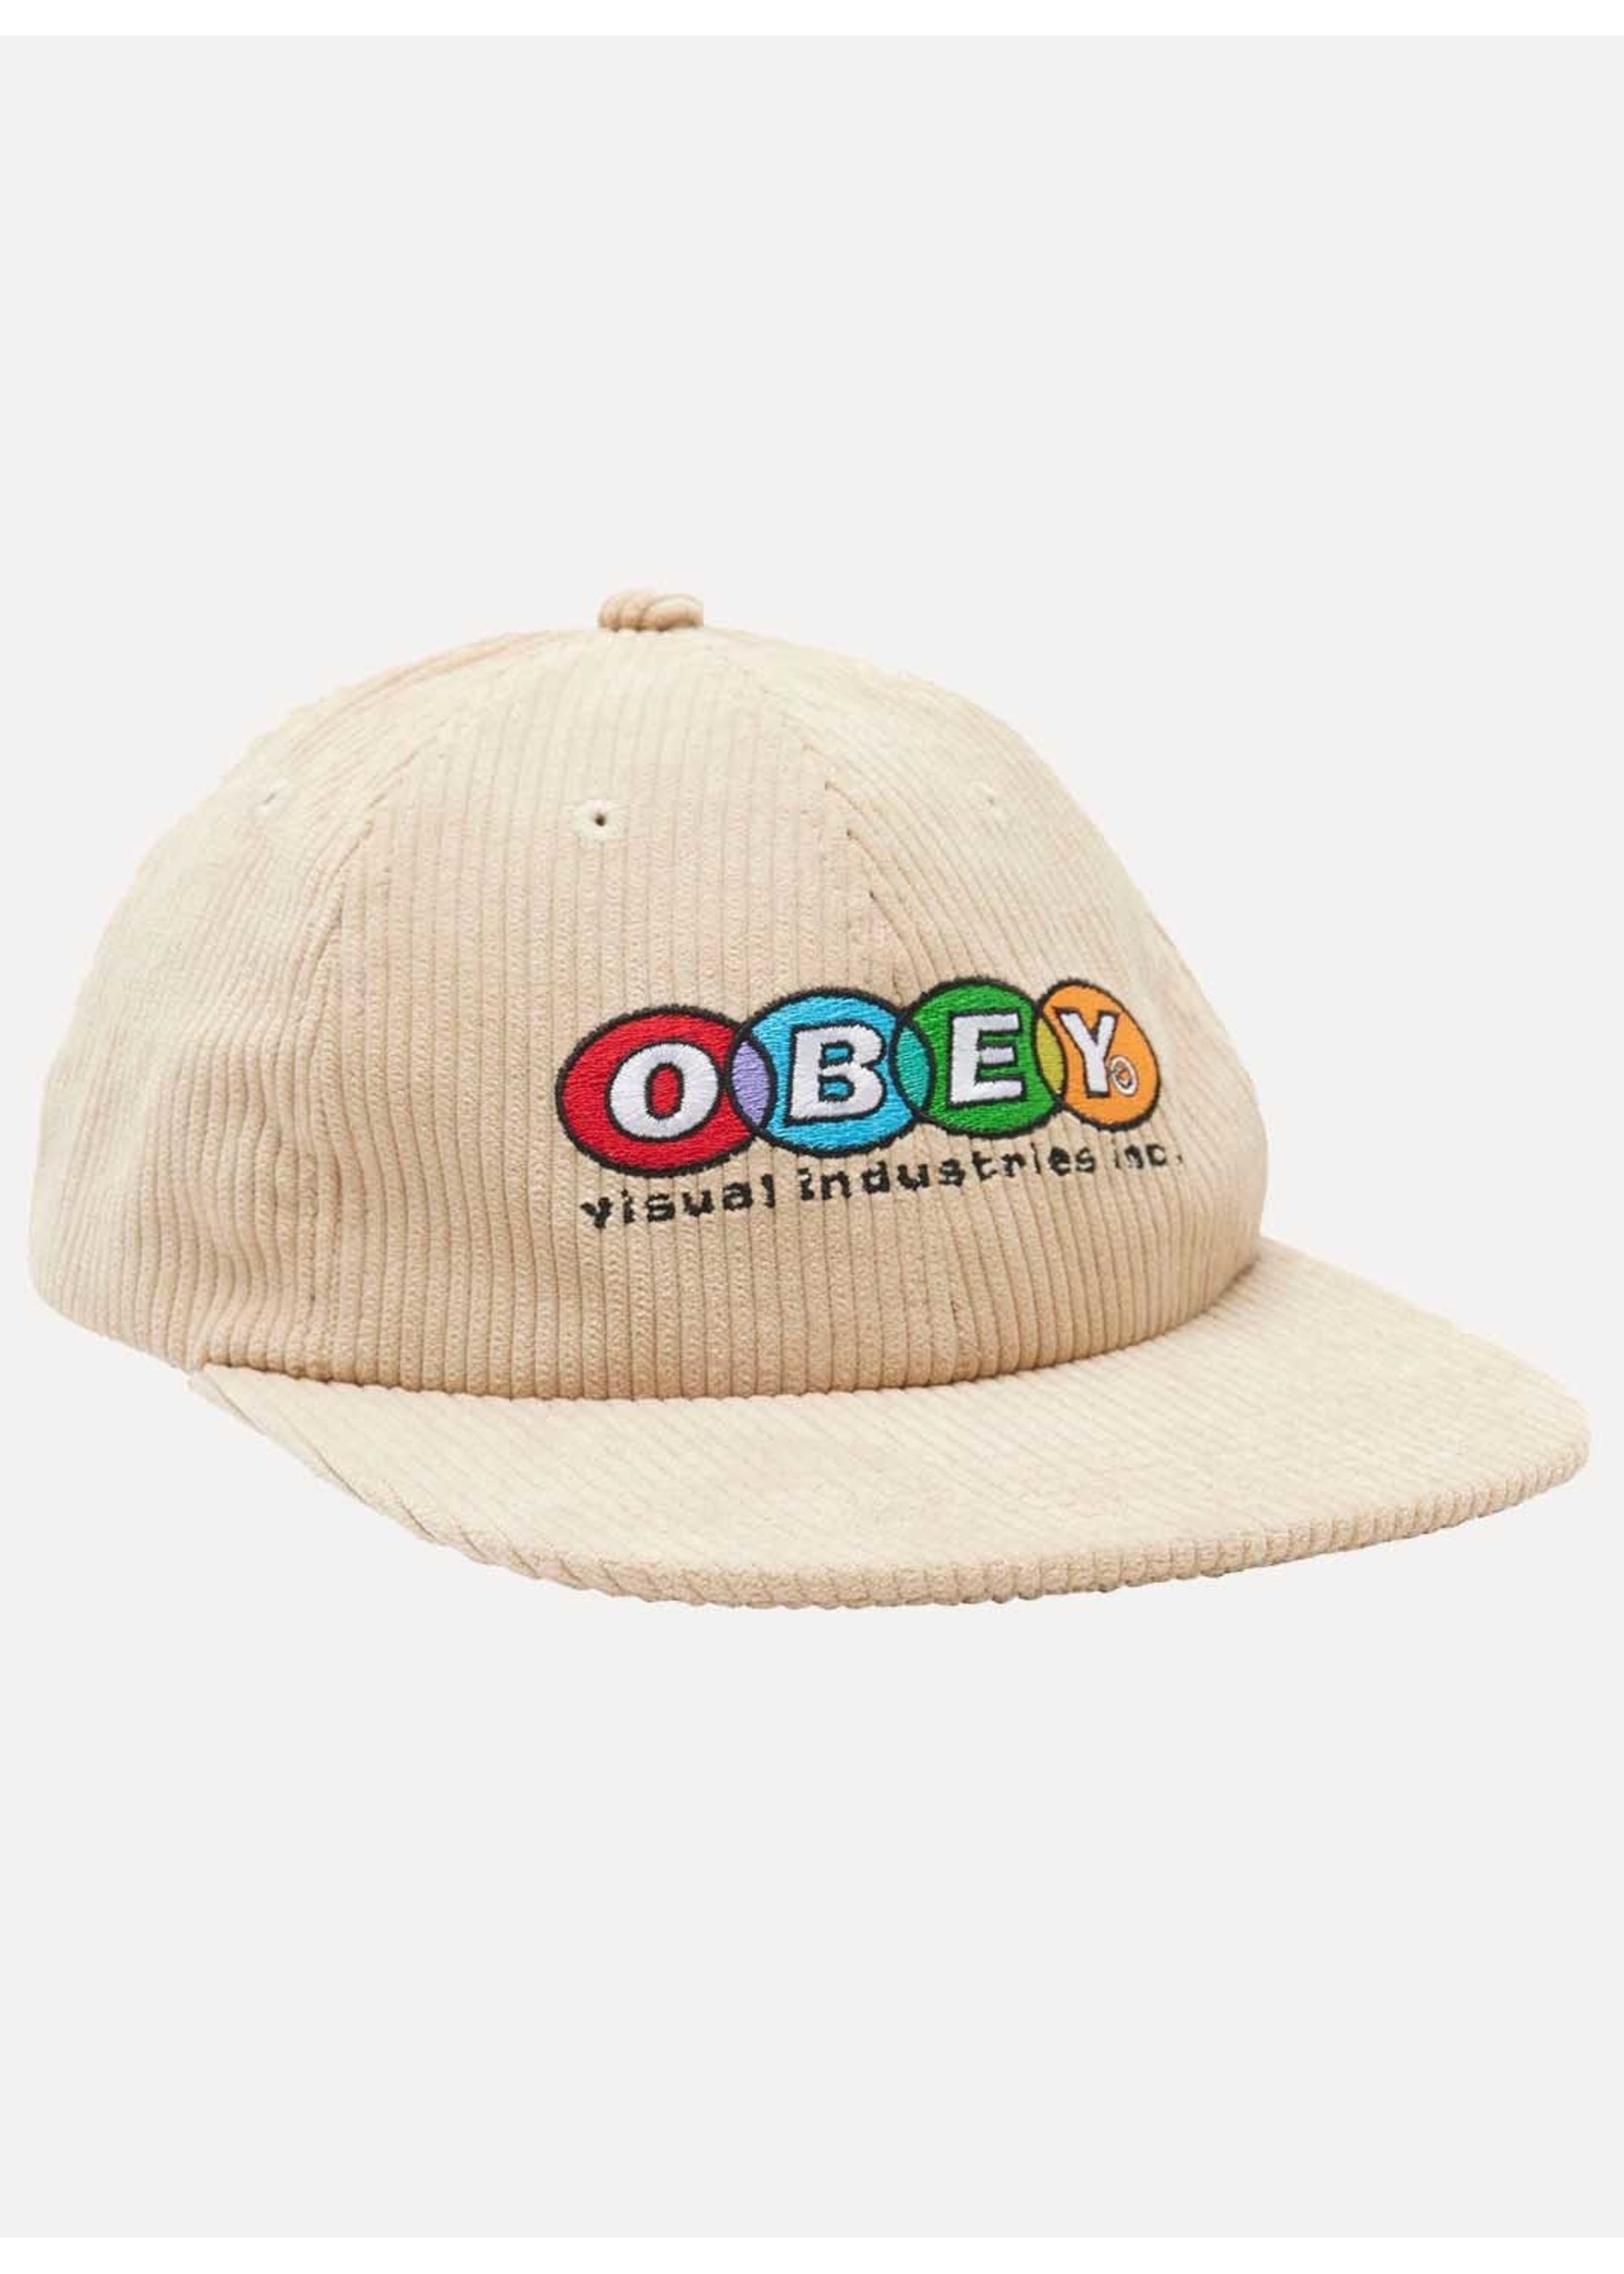 Obey Industries 6 Panel Snap Cap Irish Cream 100580332-IRC